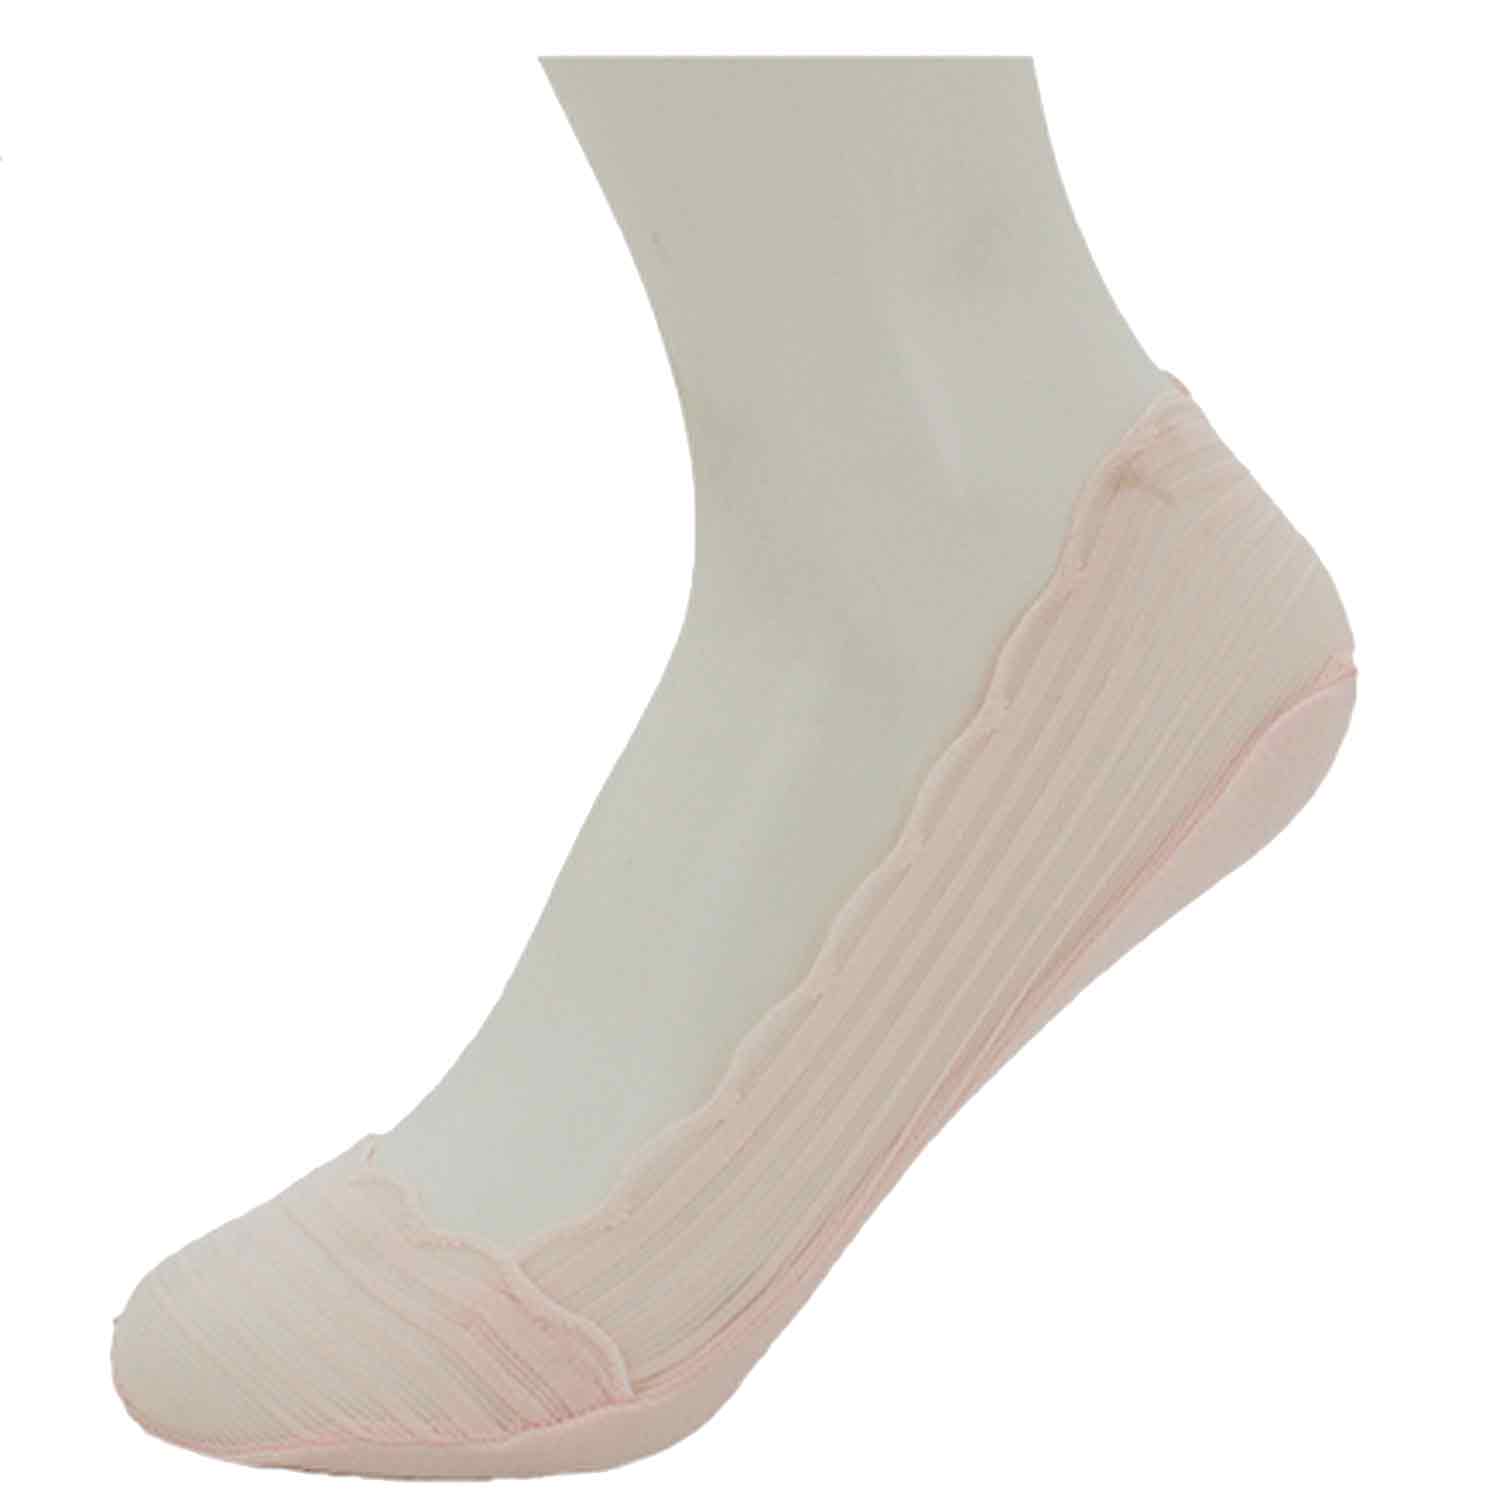 The Skandinavian Brand 5er Pack Ballerina Socken mit Spitze Gr. 36-41 pink